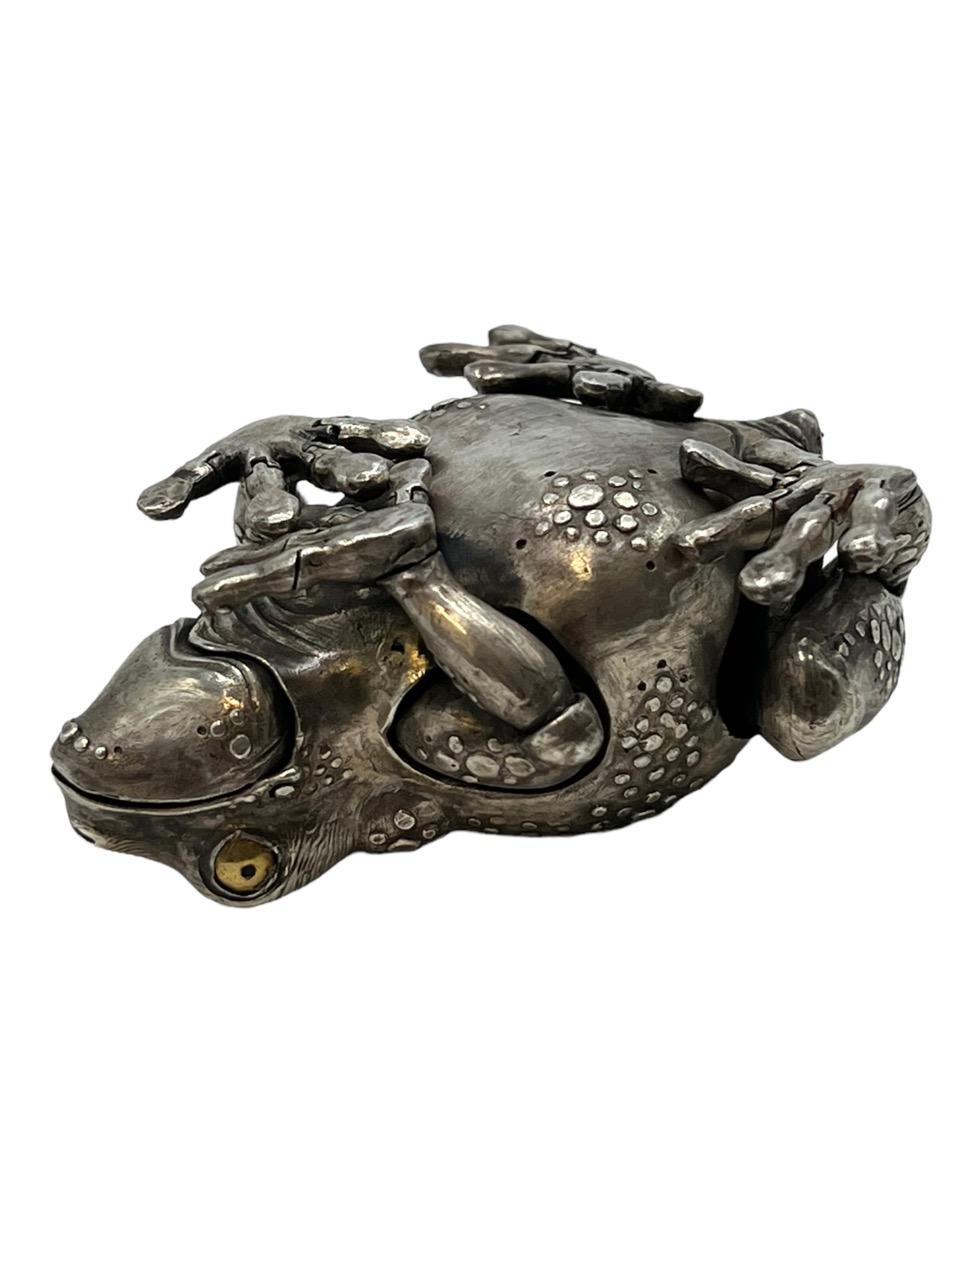 Oleg Konstantinov Fully Articulated Frog Made of Sterling Silver 11